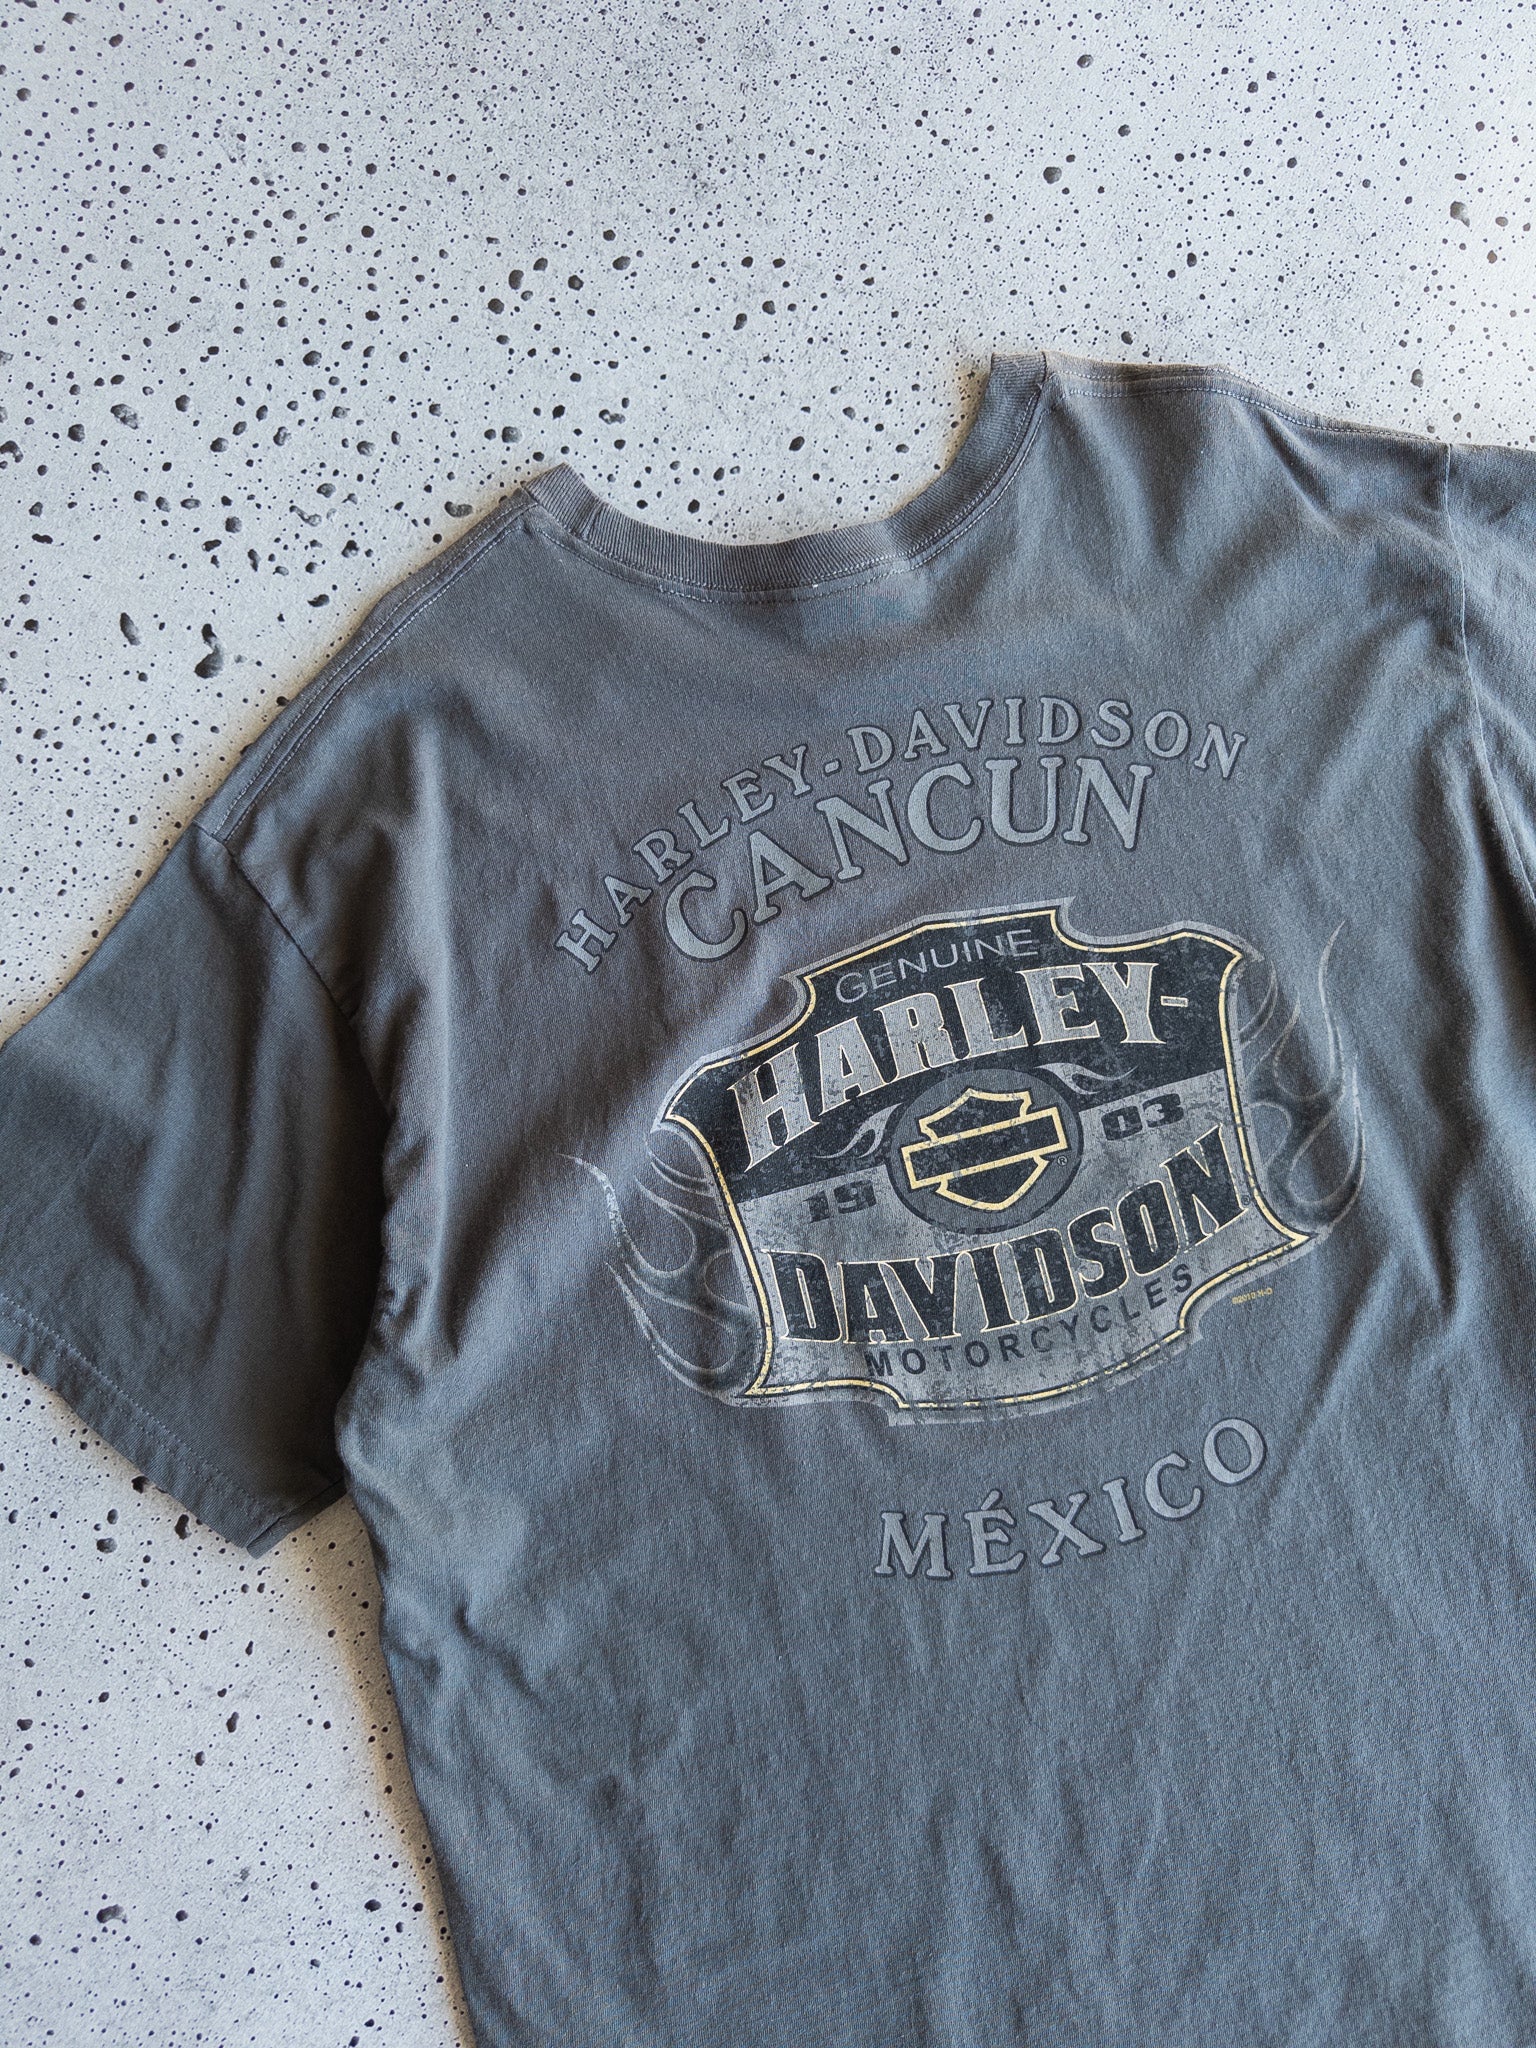 Vintage Harley Davidson Cancun Mexico Tee (XL)